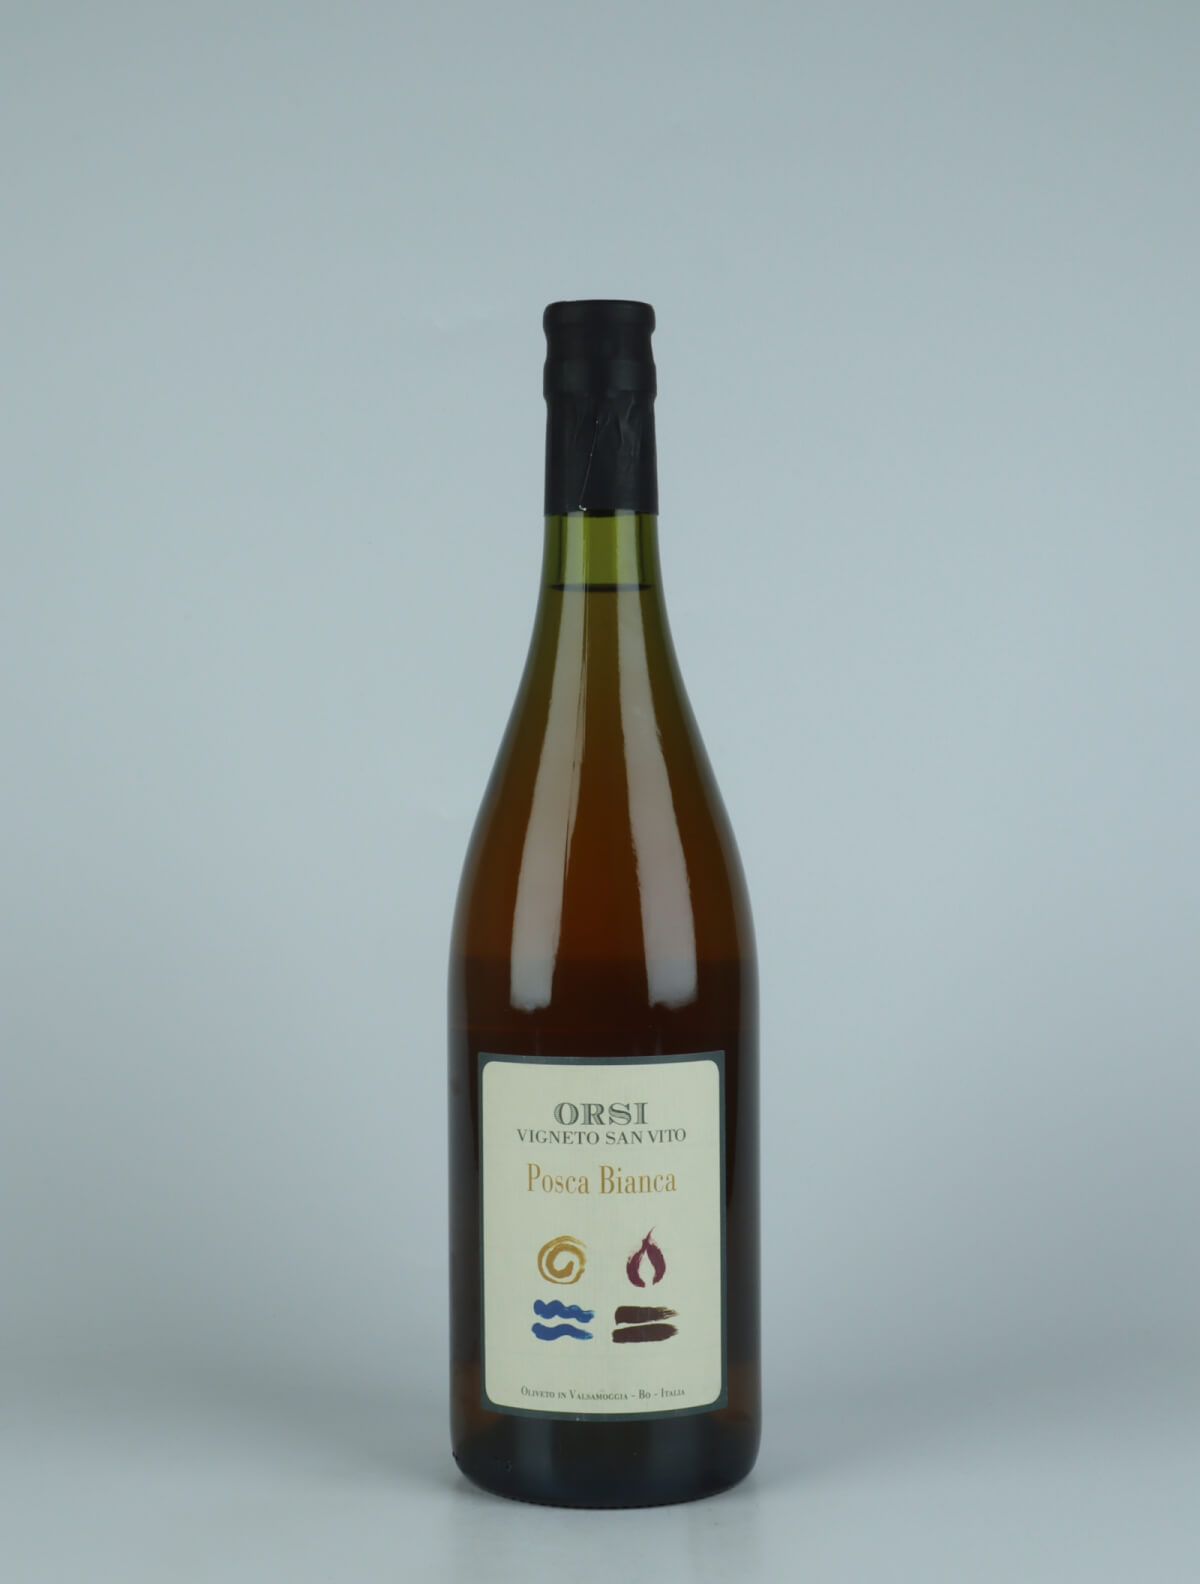 A bottle N.V. Posca Bianca White wine from Orsi - San Vito, Emilia-Romagna in Italy